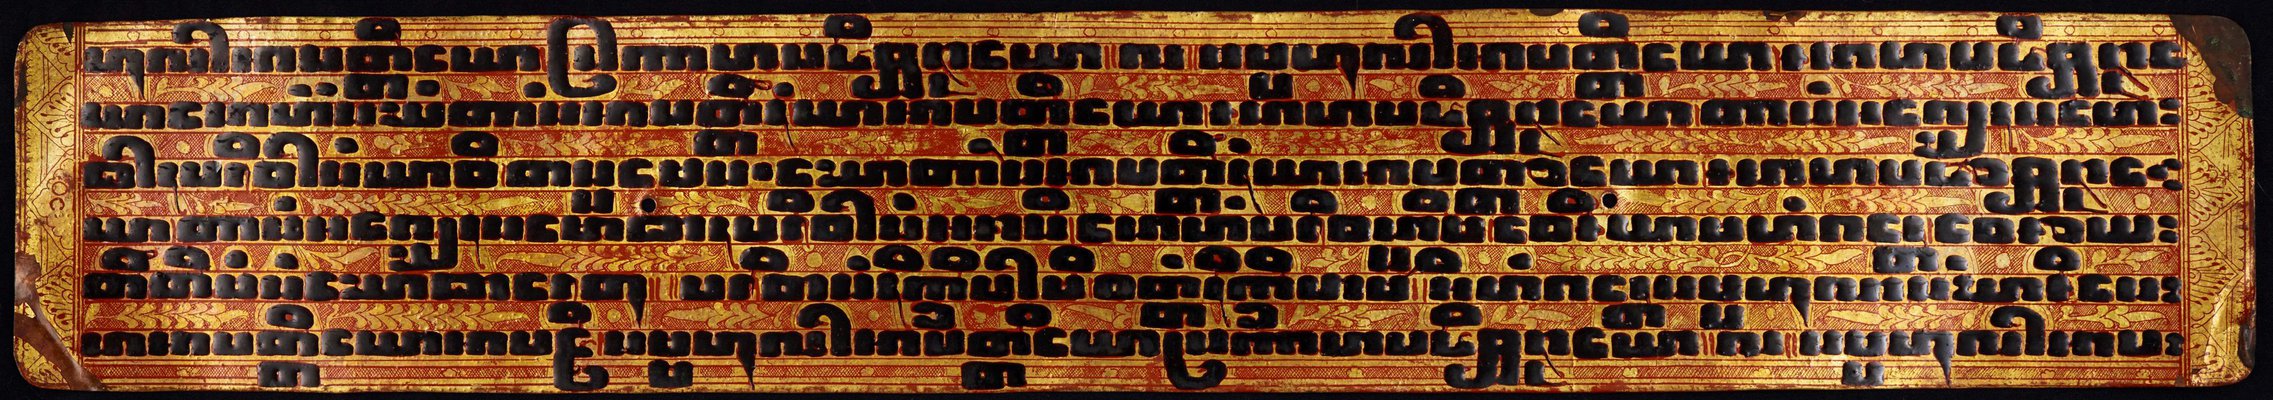 Alternate image of Kammawaza manuscript by 